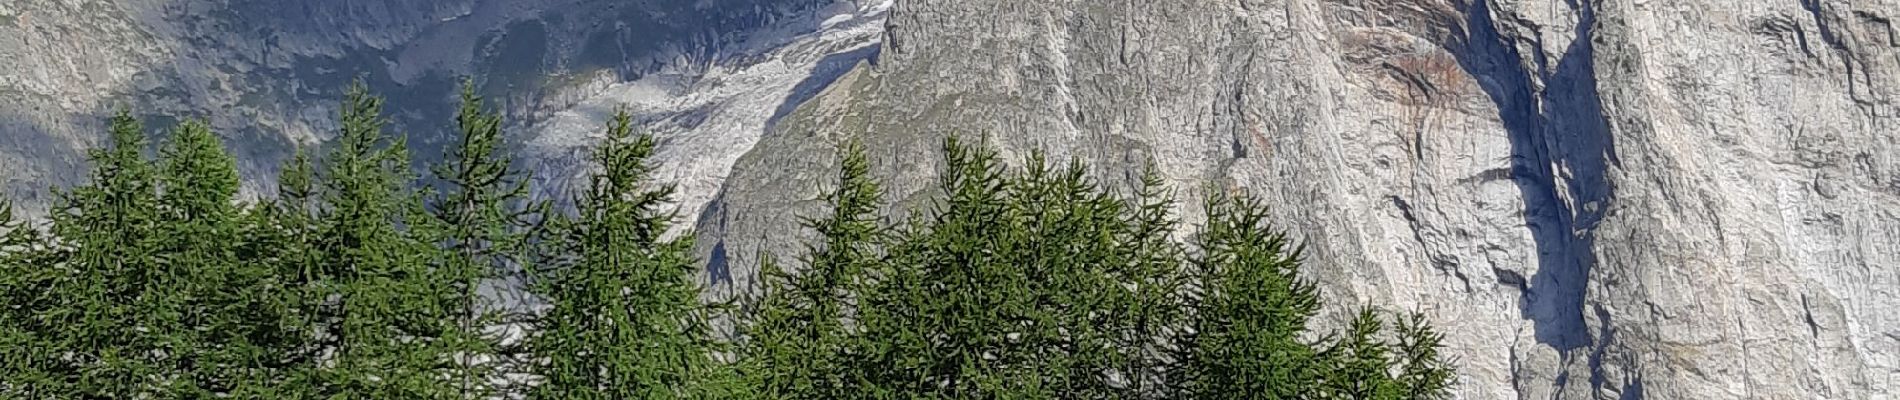 Tour Wandern Courmayeur - étape monte Bianco mottets - Photo